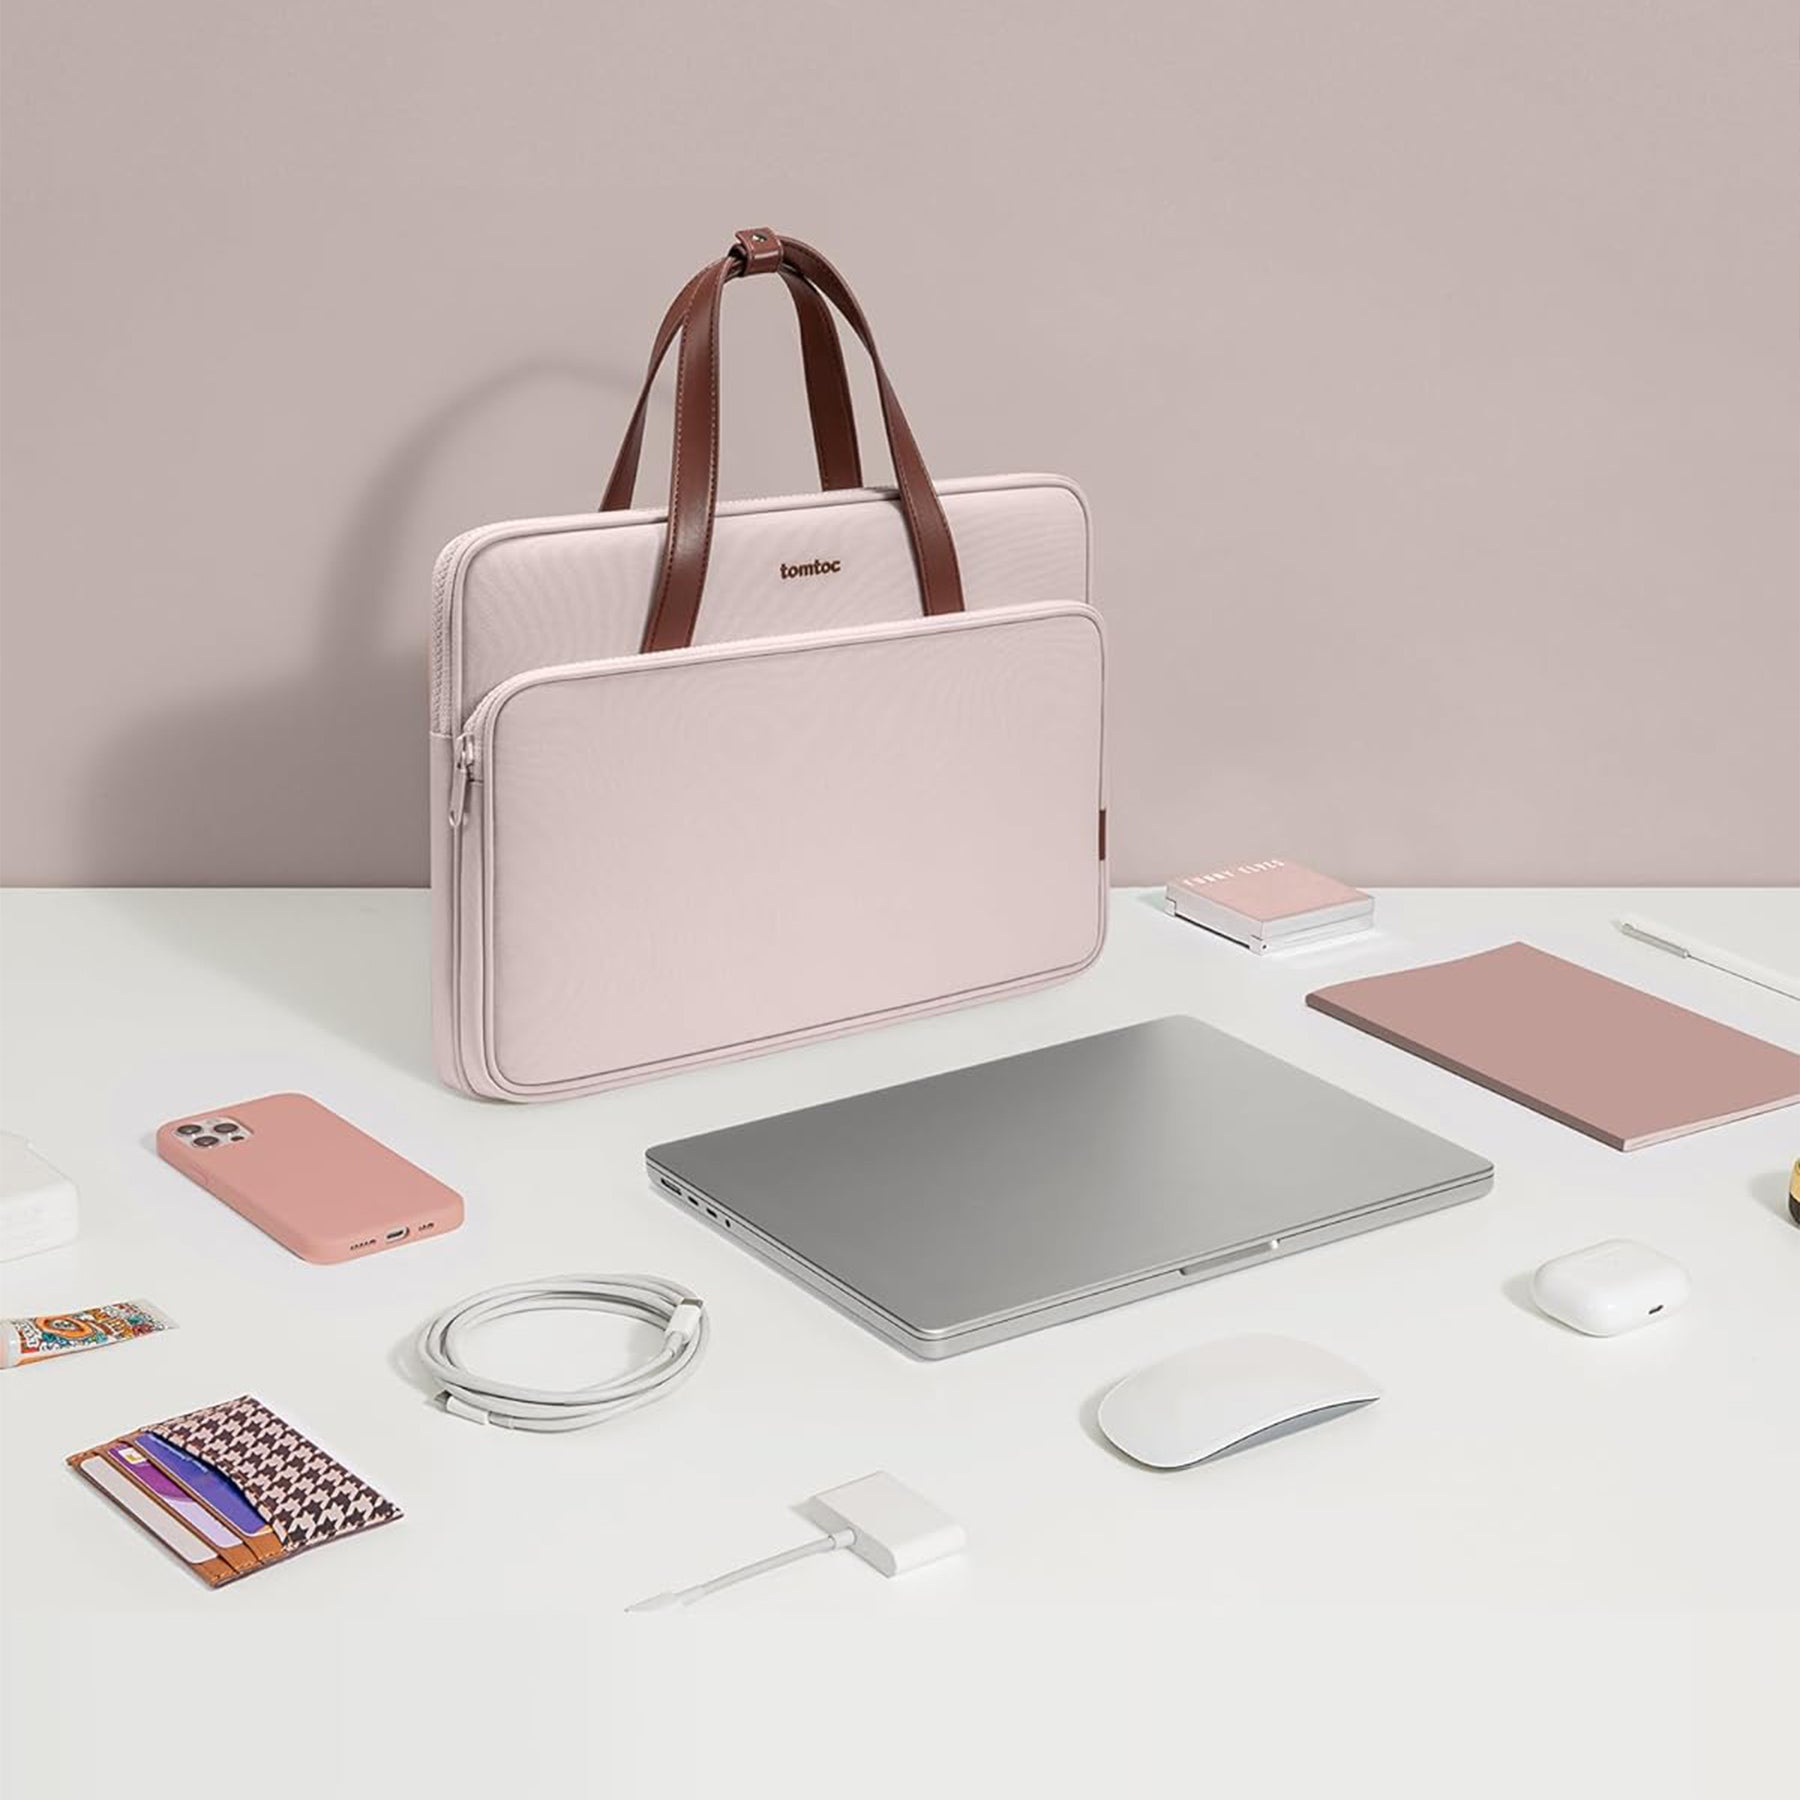 tomtoc 14 Inch Lady Laptop Bag / Handbag Women / Ladies Bag - Pink